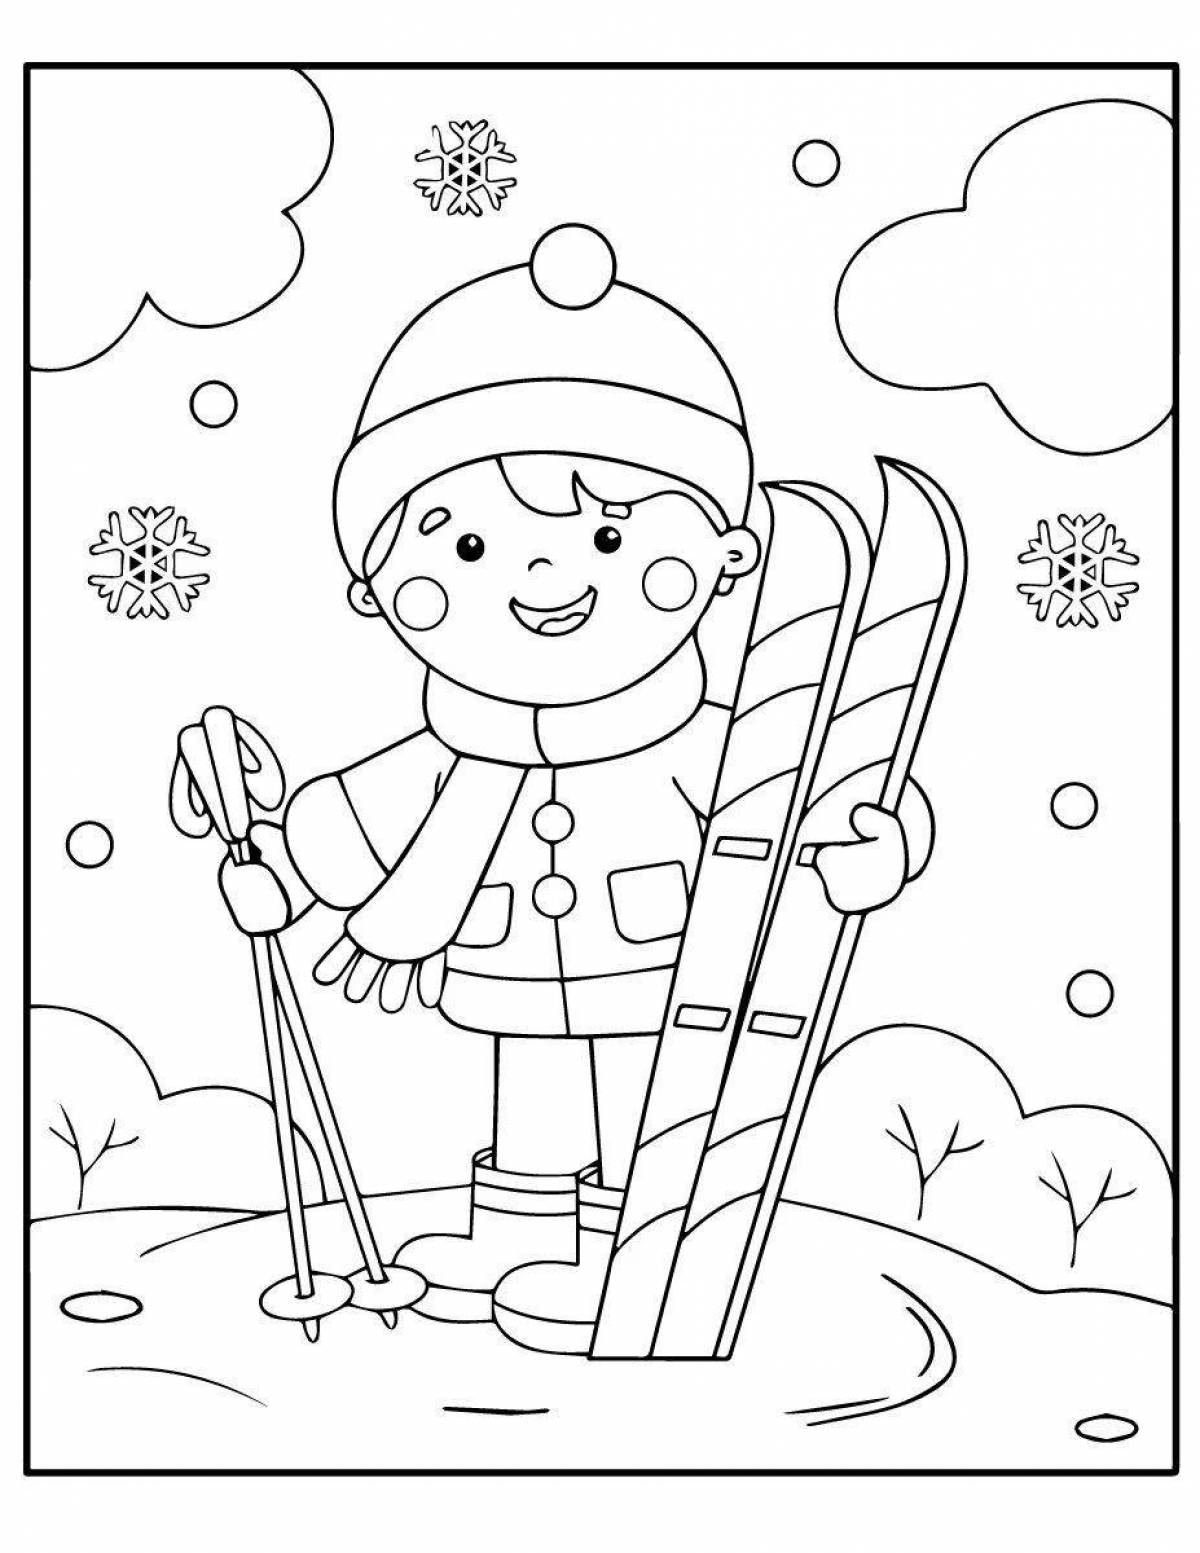 Adorable dow winter coloring book